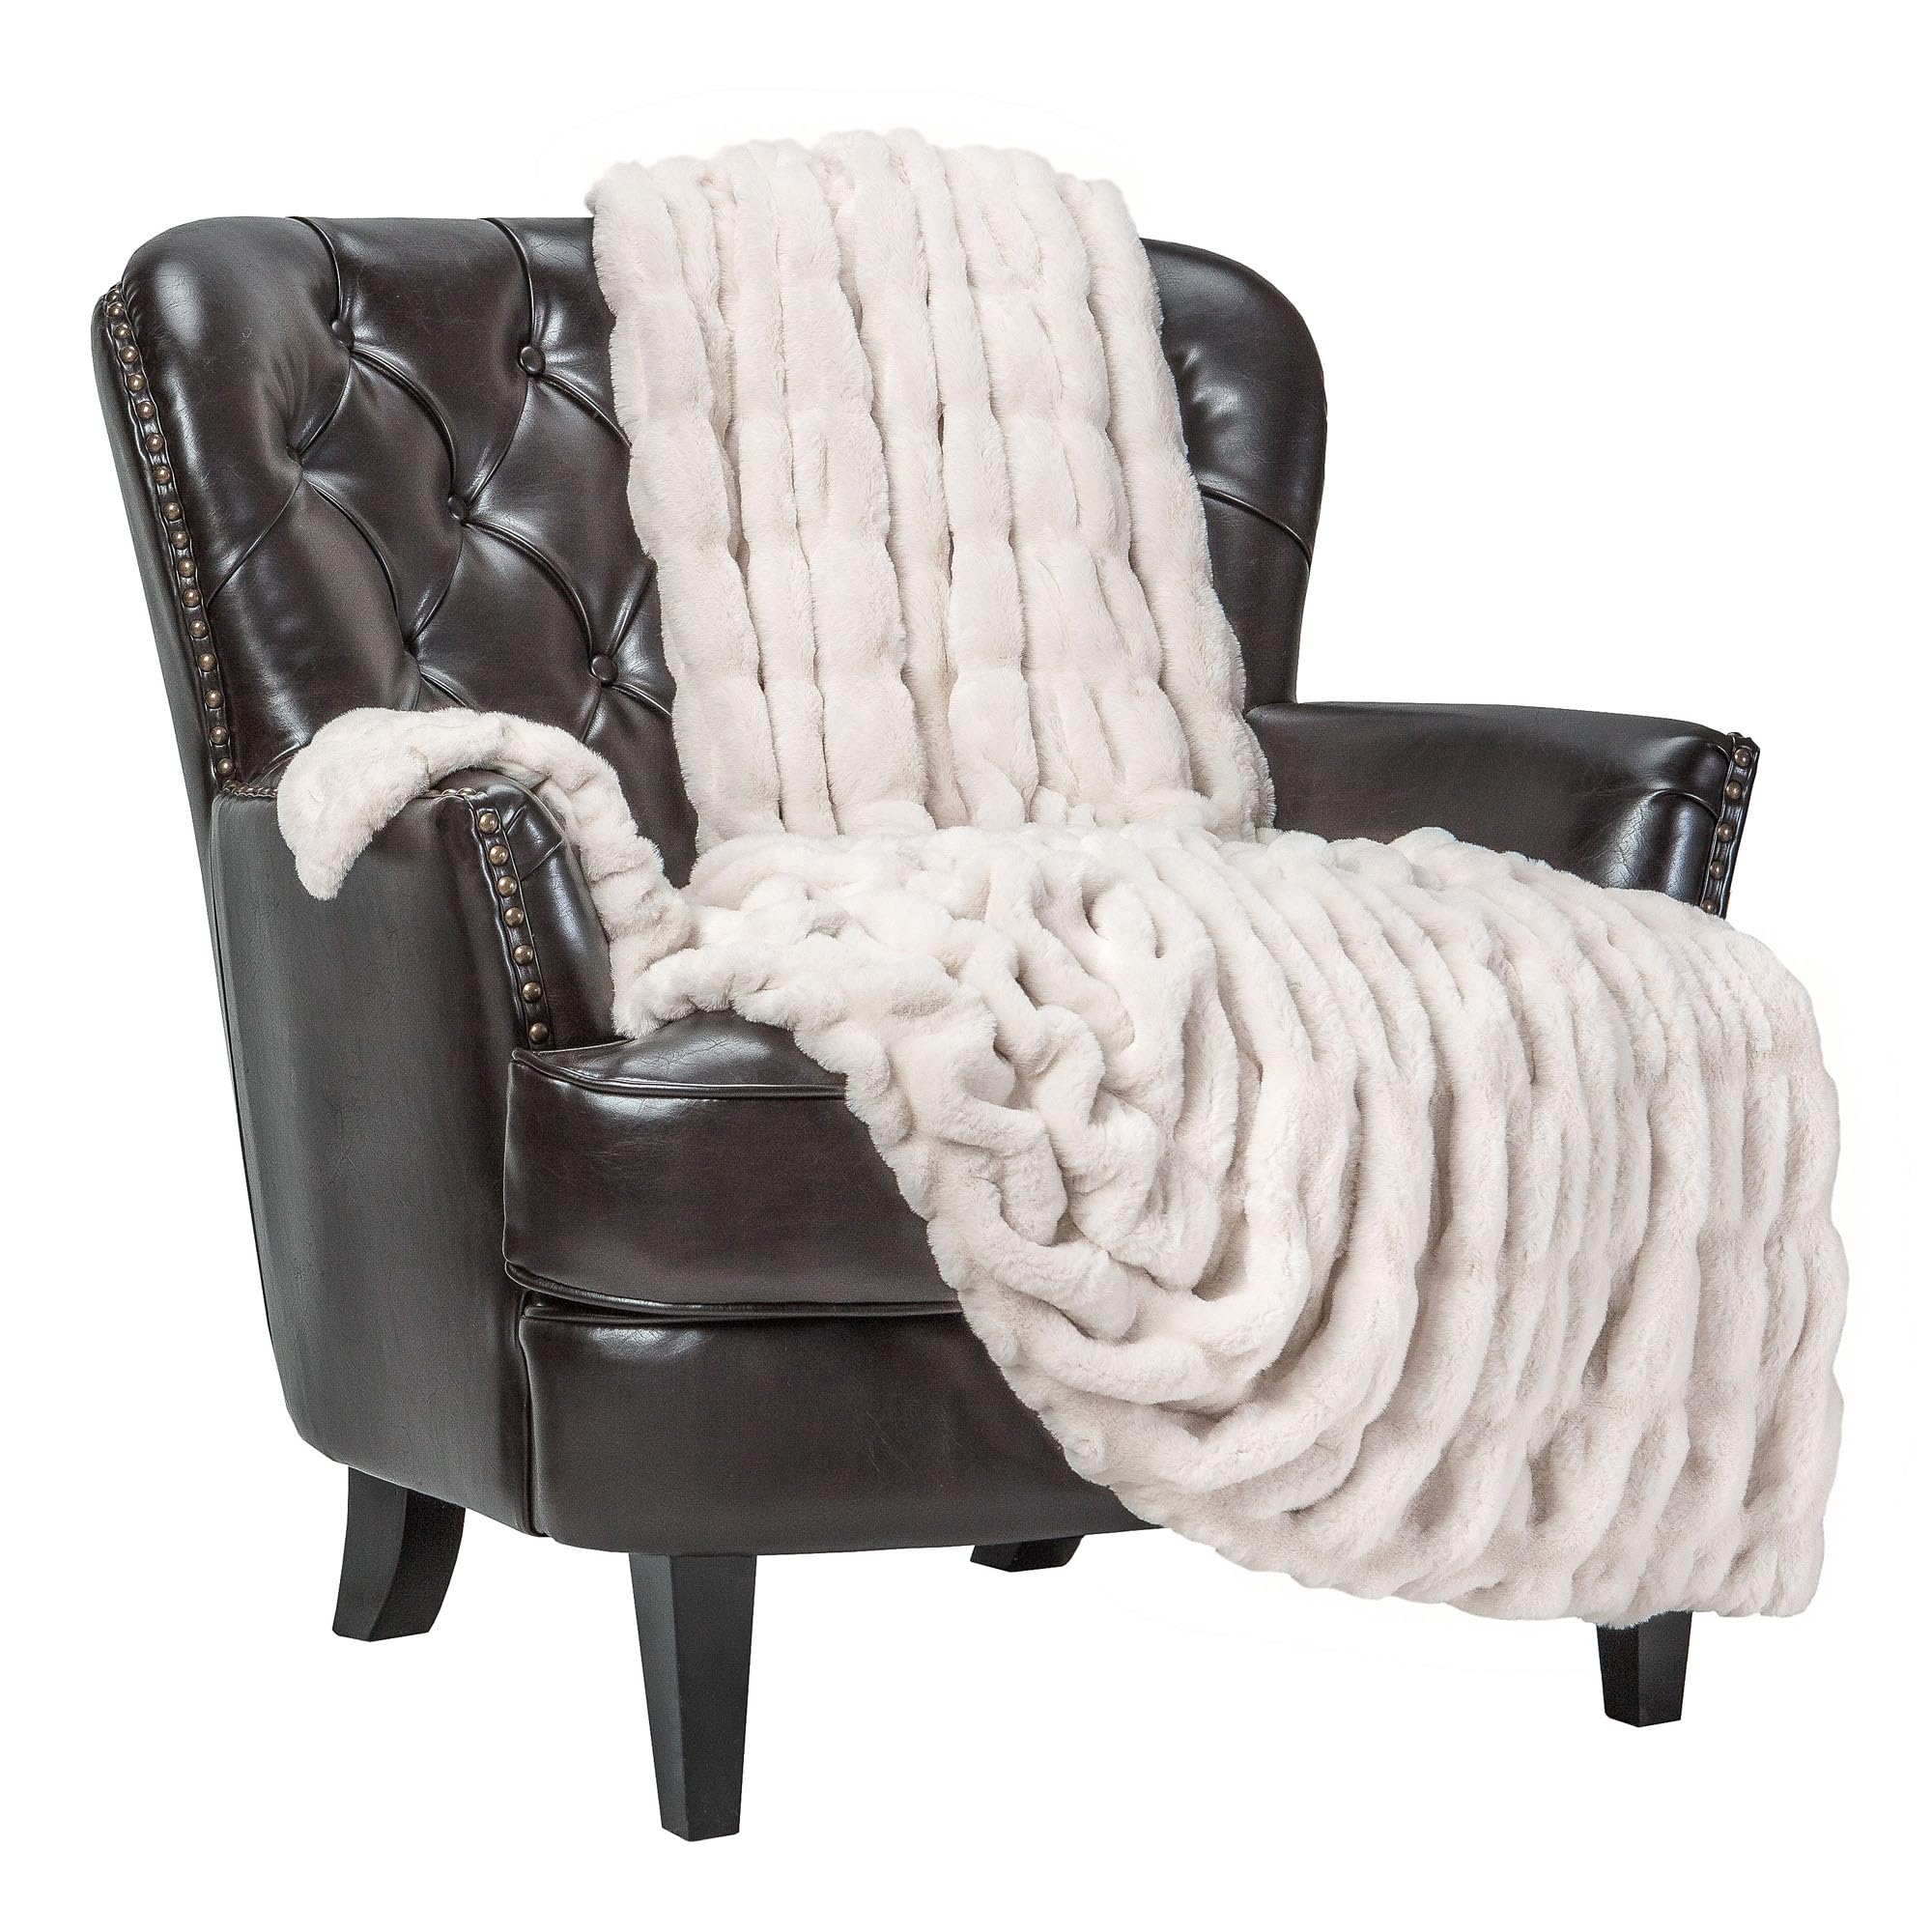 Chanasya Premium Ruched Faux Fur Throw Blanket - Luxurious, Soft Reversible Mink Blanket